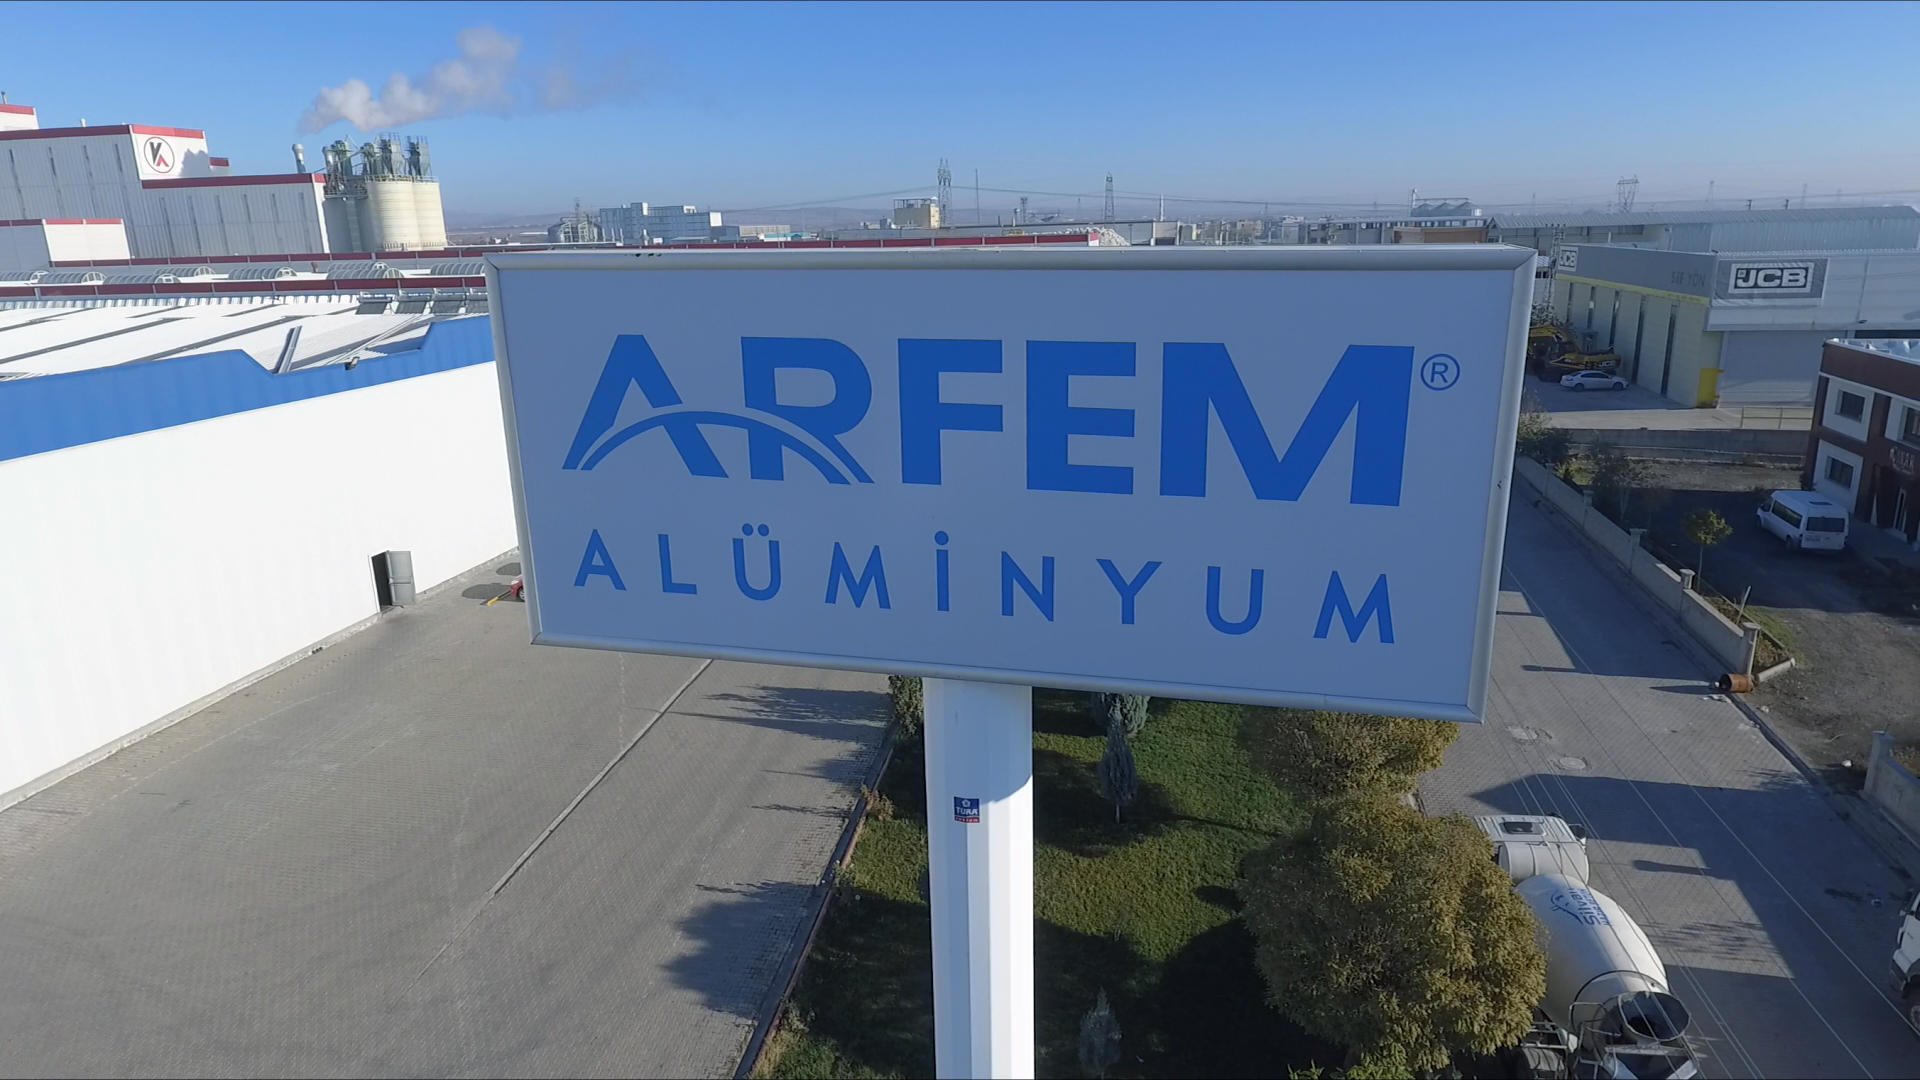 Turkey’s Arfem Aluminium company talks on plans in Azerbaijan